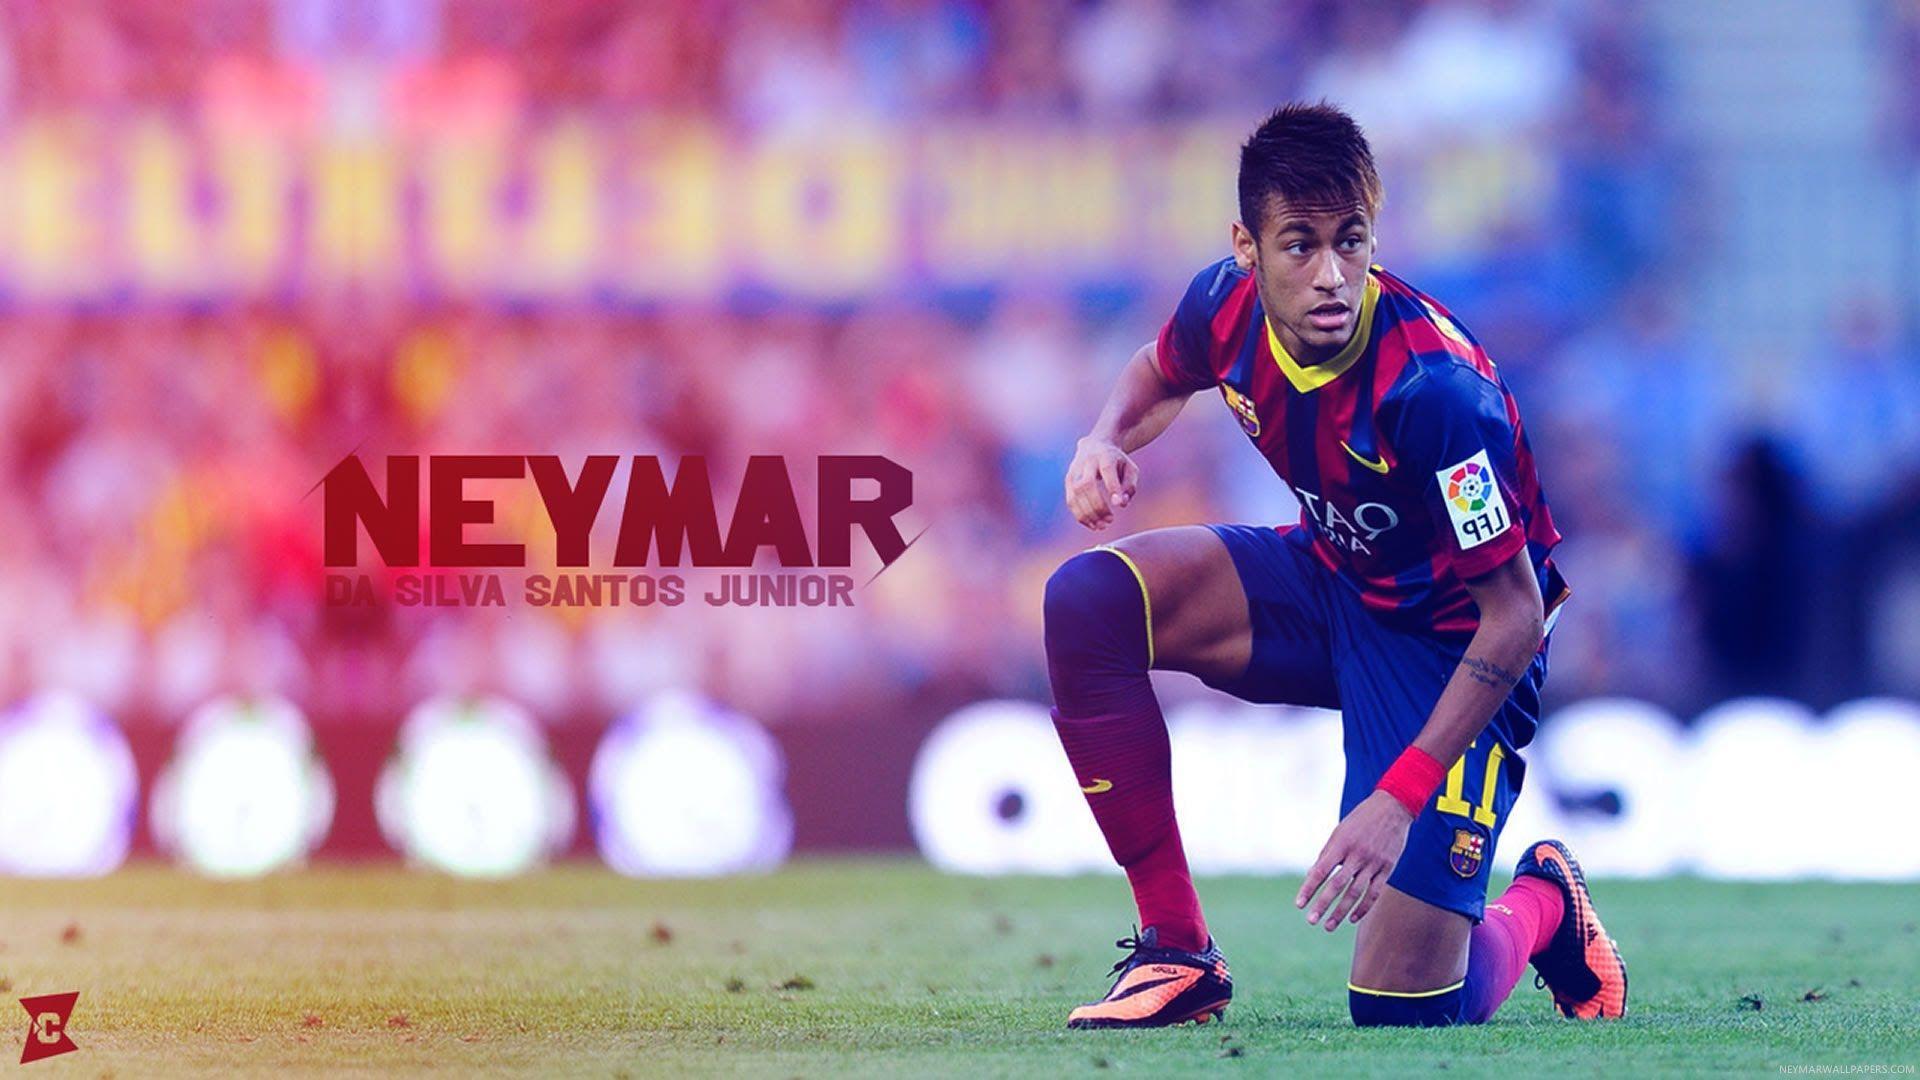 Neymar Jr Wallpaper 2015 1080p